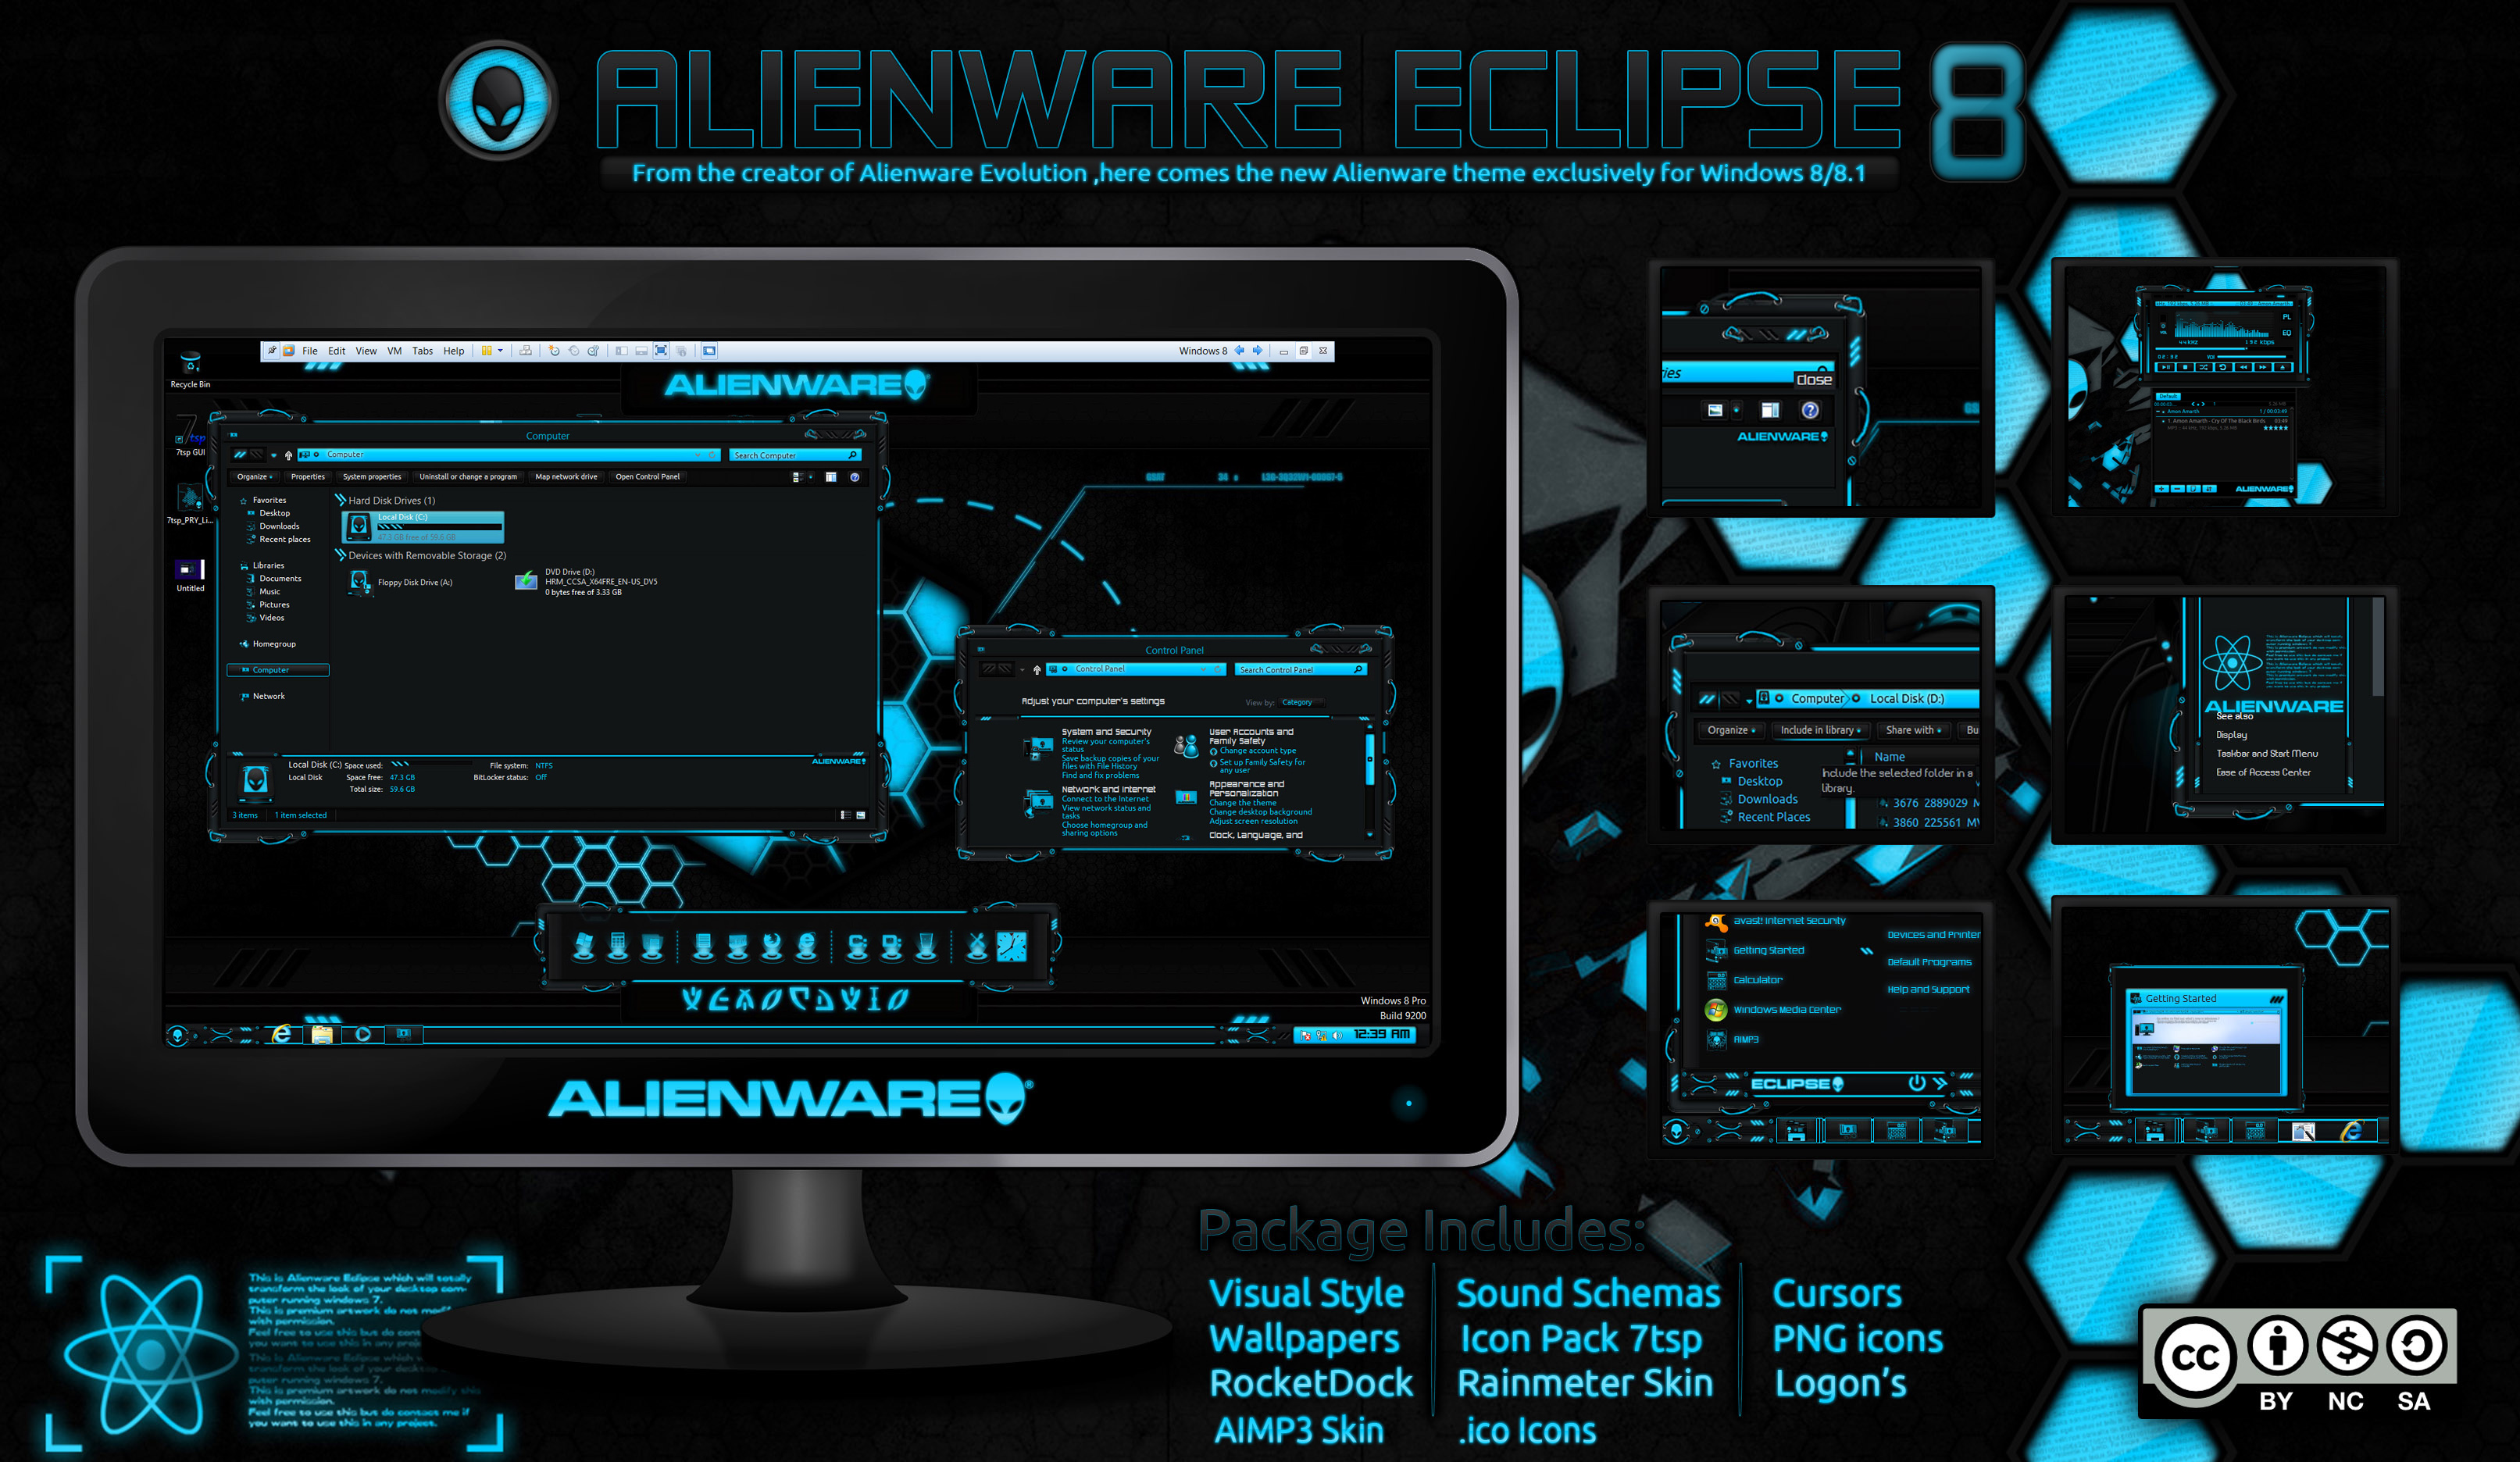 Alienware Eclipse win 881 [Update 6282015] by Mr Blade on